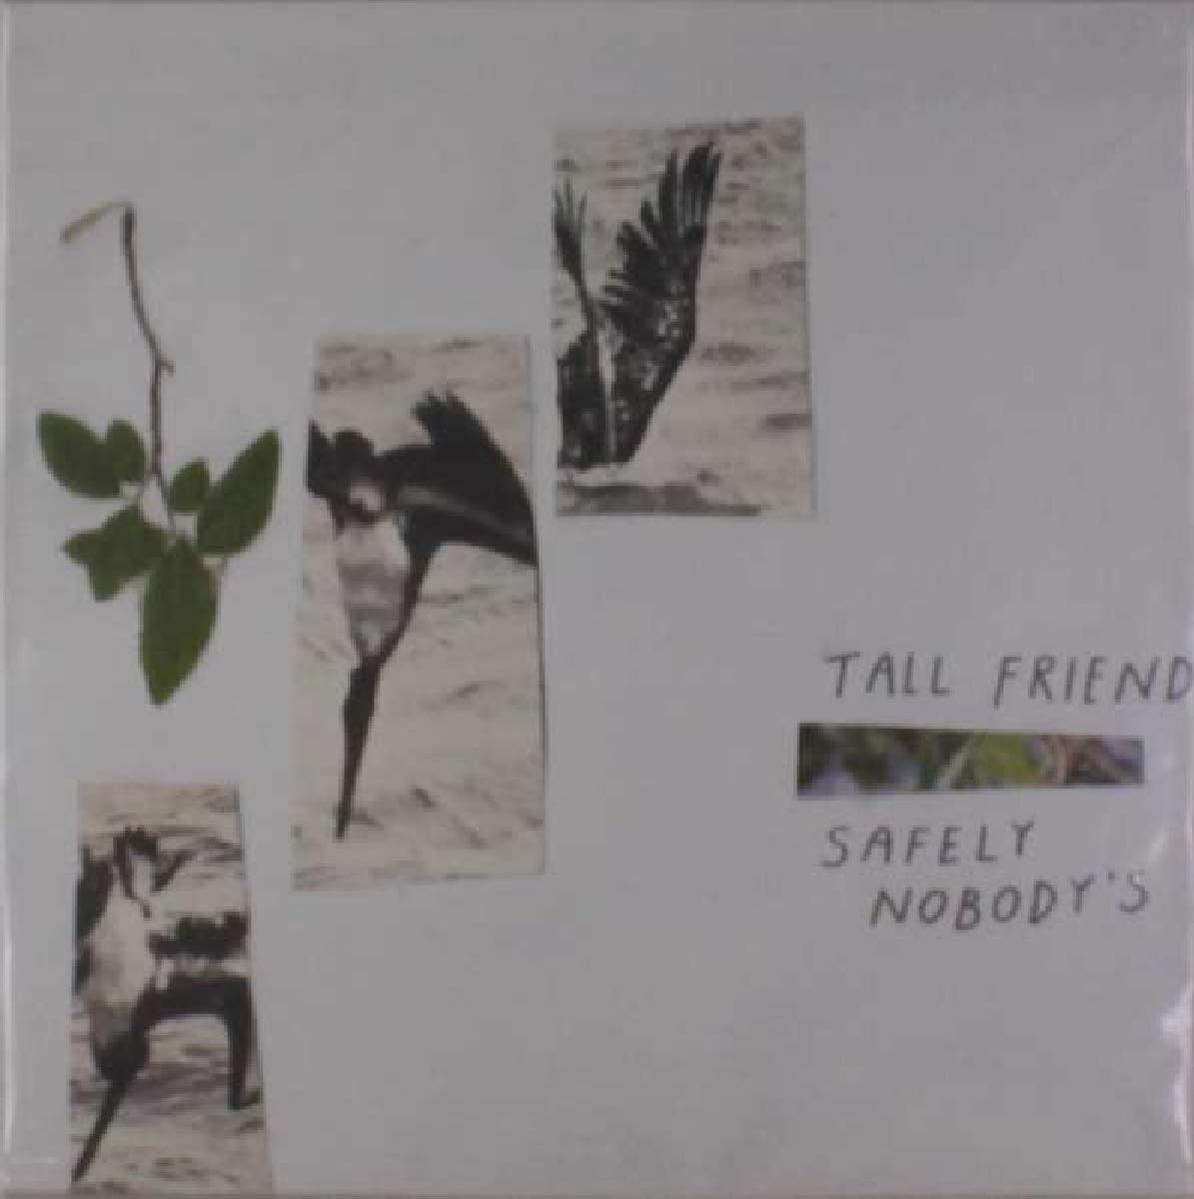 (Vinyl) - - Safely Friend Nobody\'s Tall